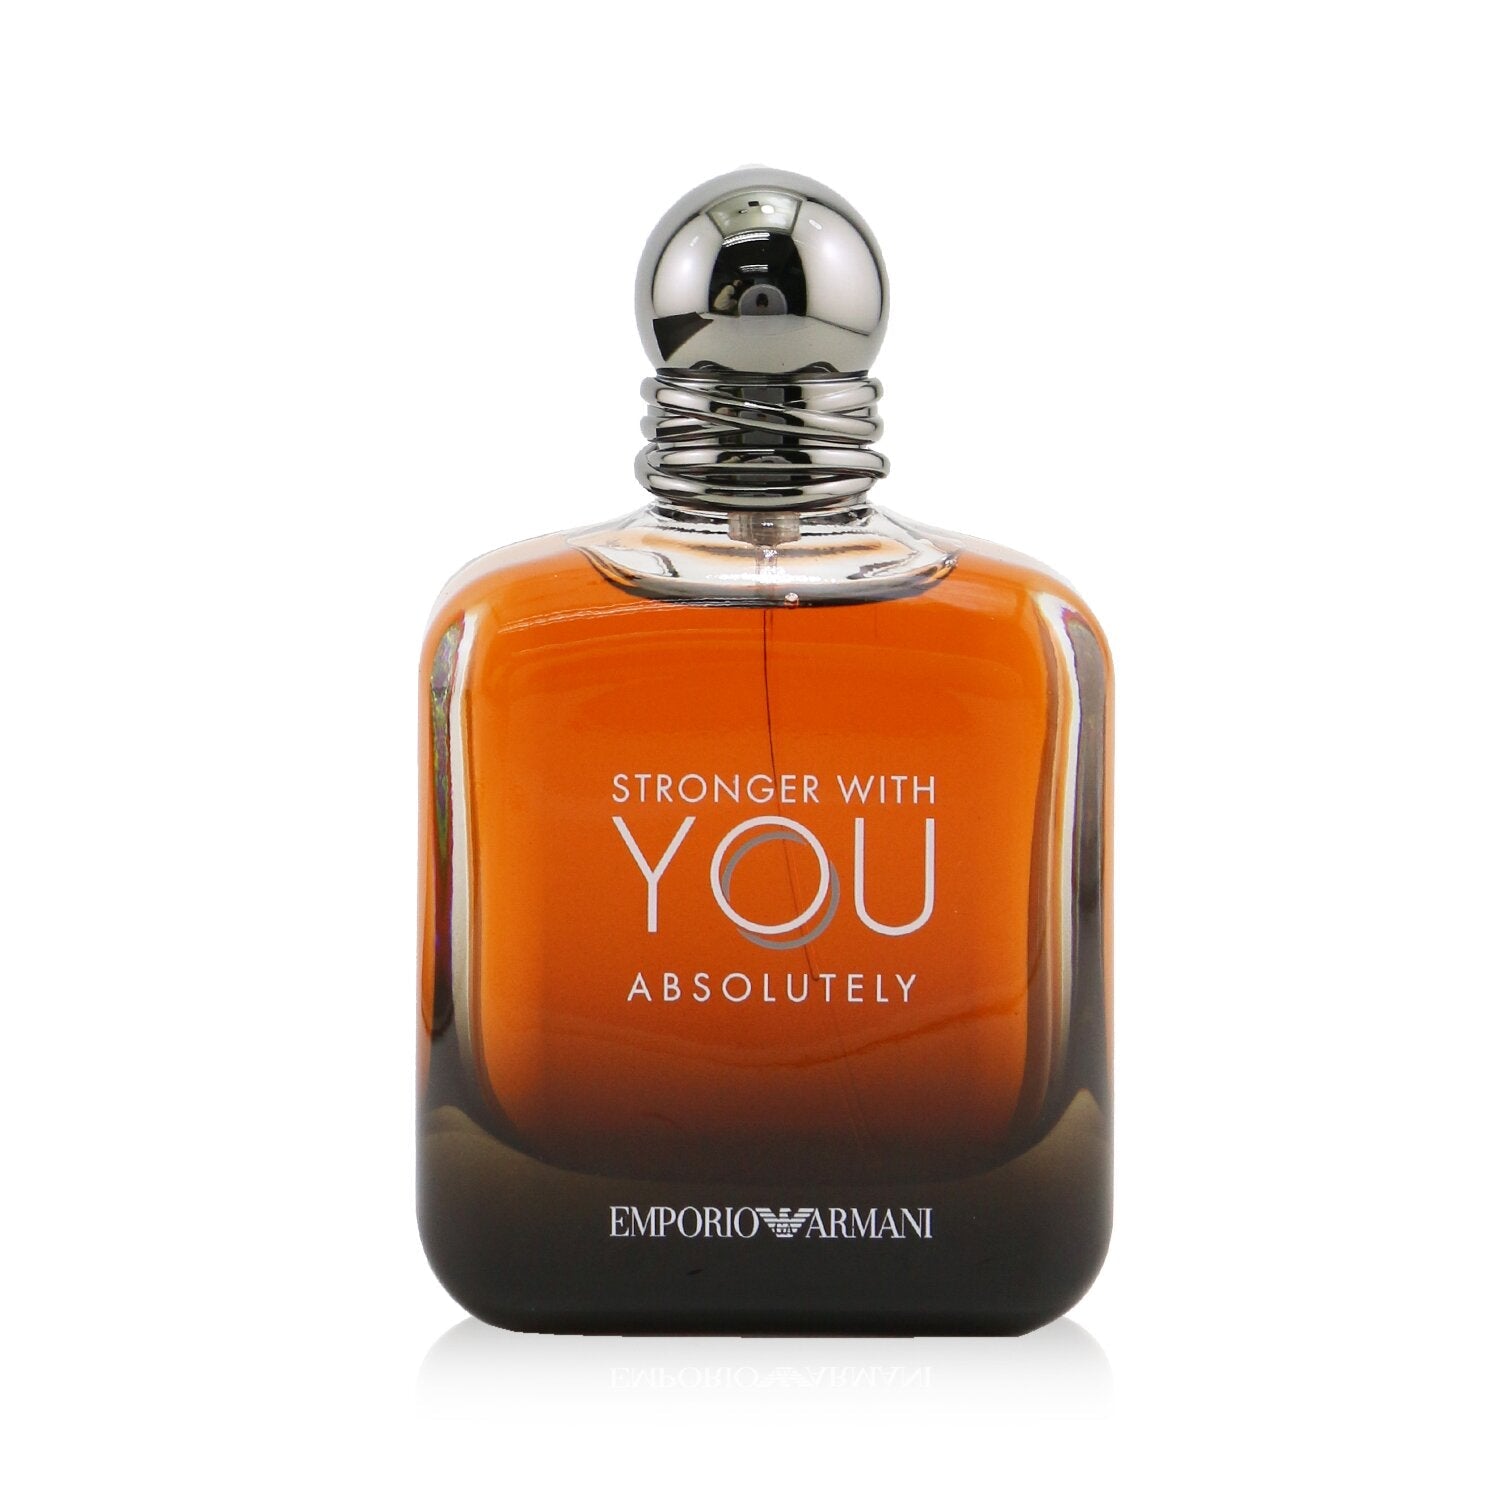 Giorgio Armani Emporio Armani Stronger With You Absolutely Eau De Parf Fresh Beauty Co. USA